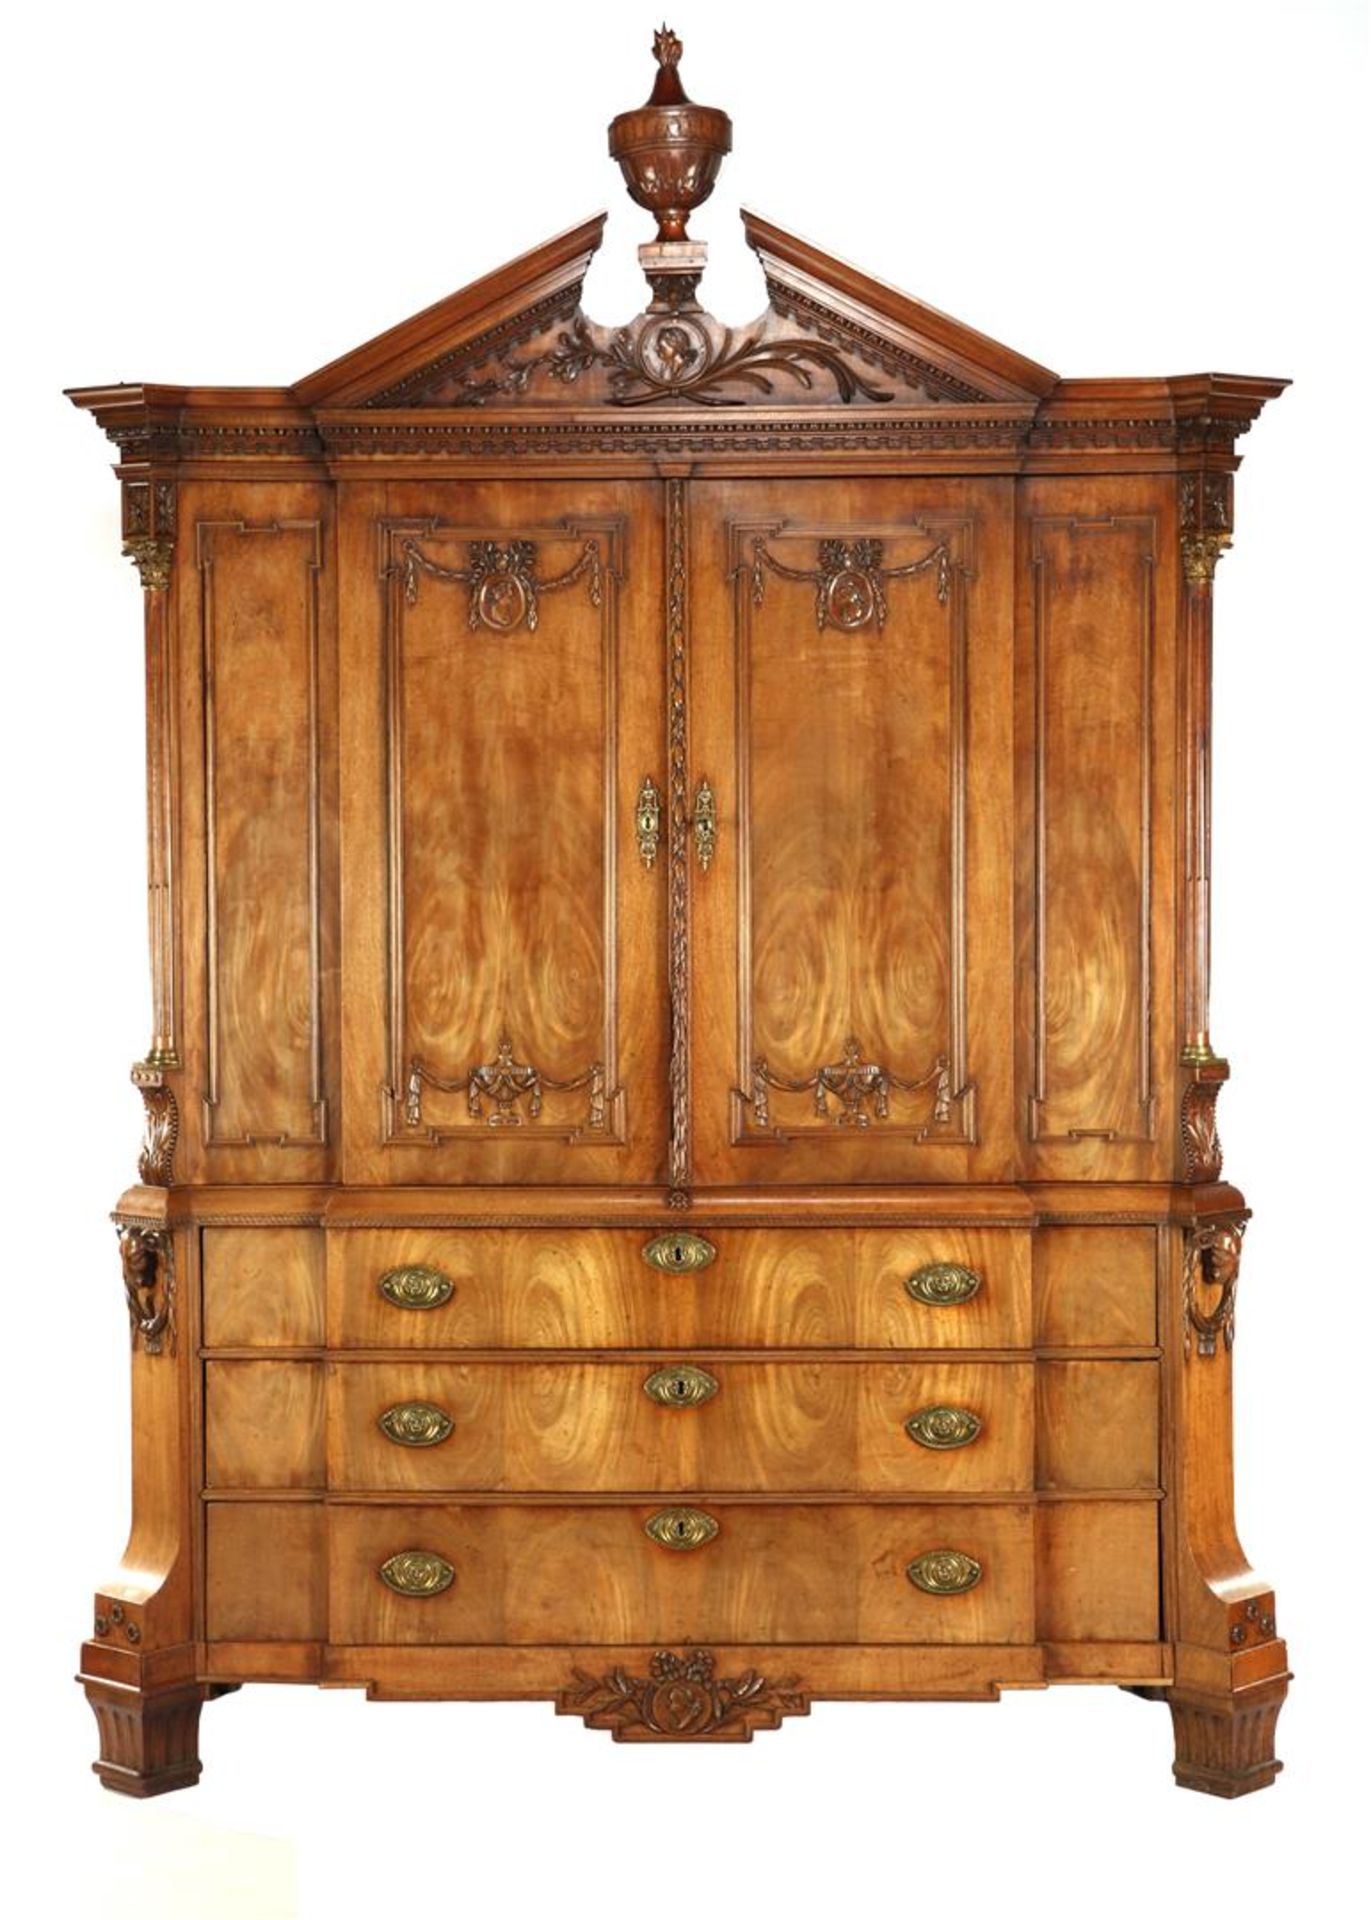 Mahogany veneer on oak cabinet with tympanum hood with vase on top